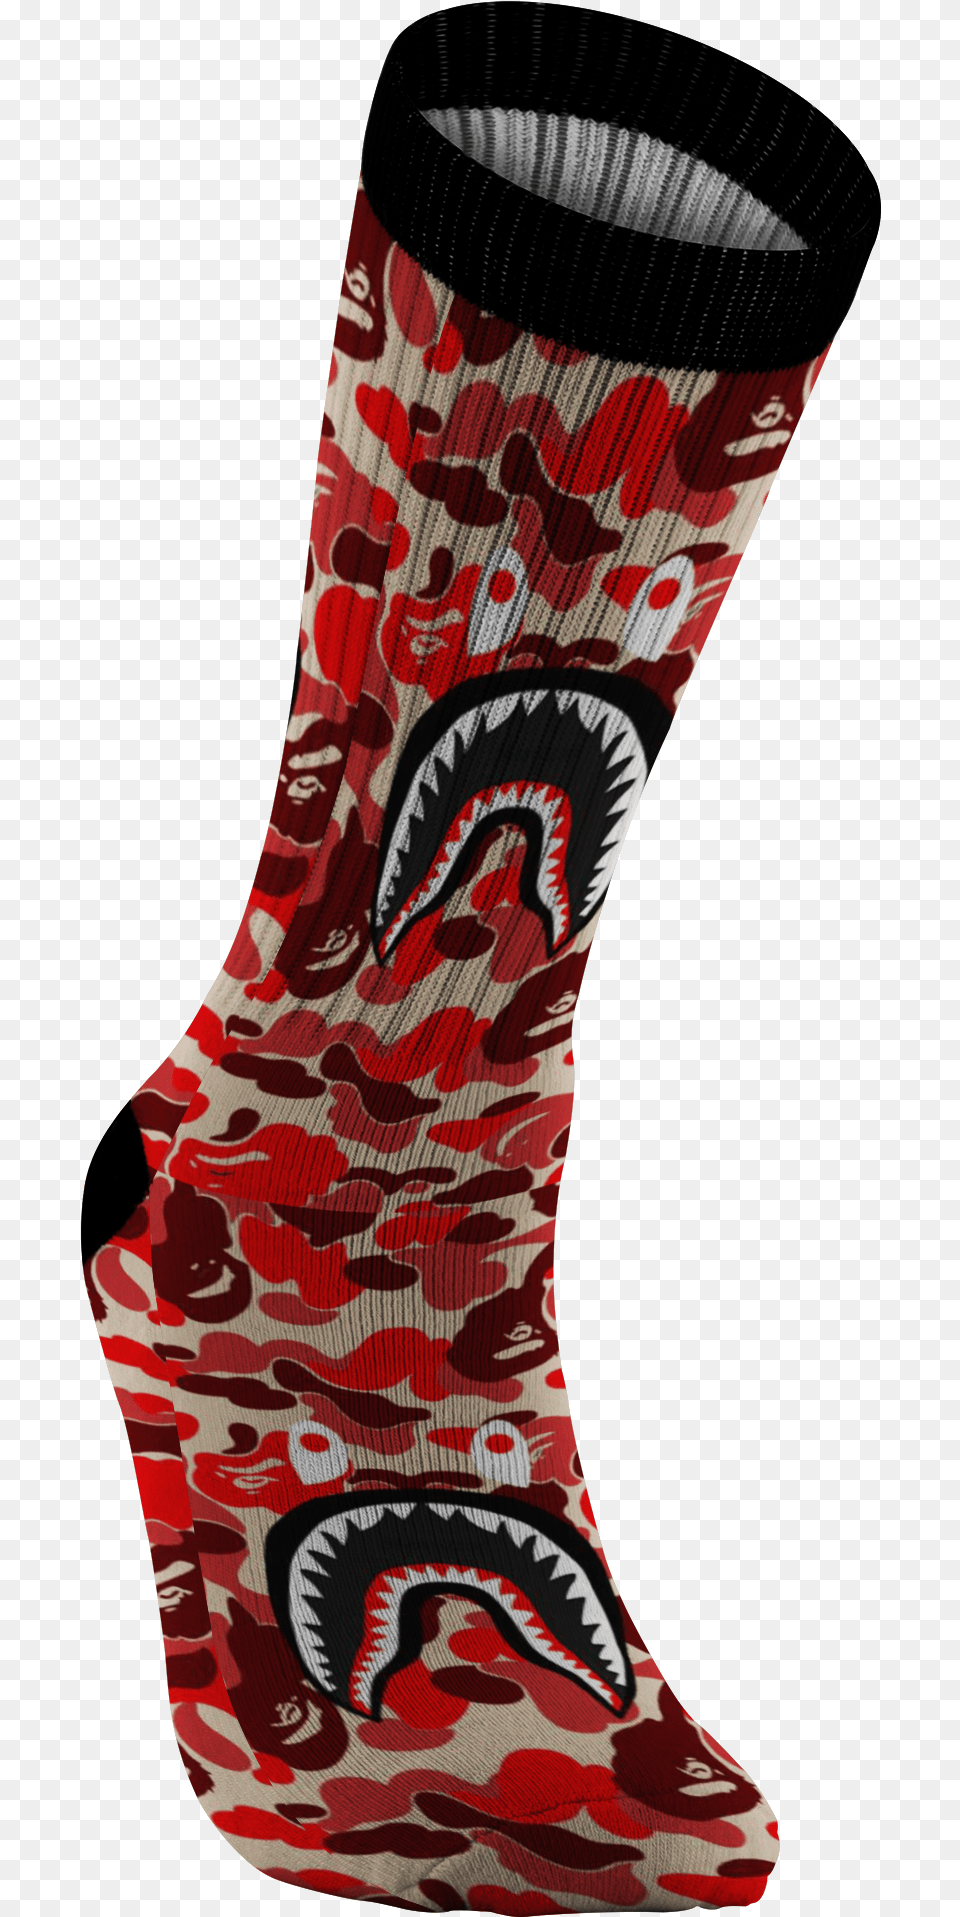 Customized Bape Red Camouflage Shark Design Print Socks Sock, Clothing, Hosiery, Adult, Female Png